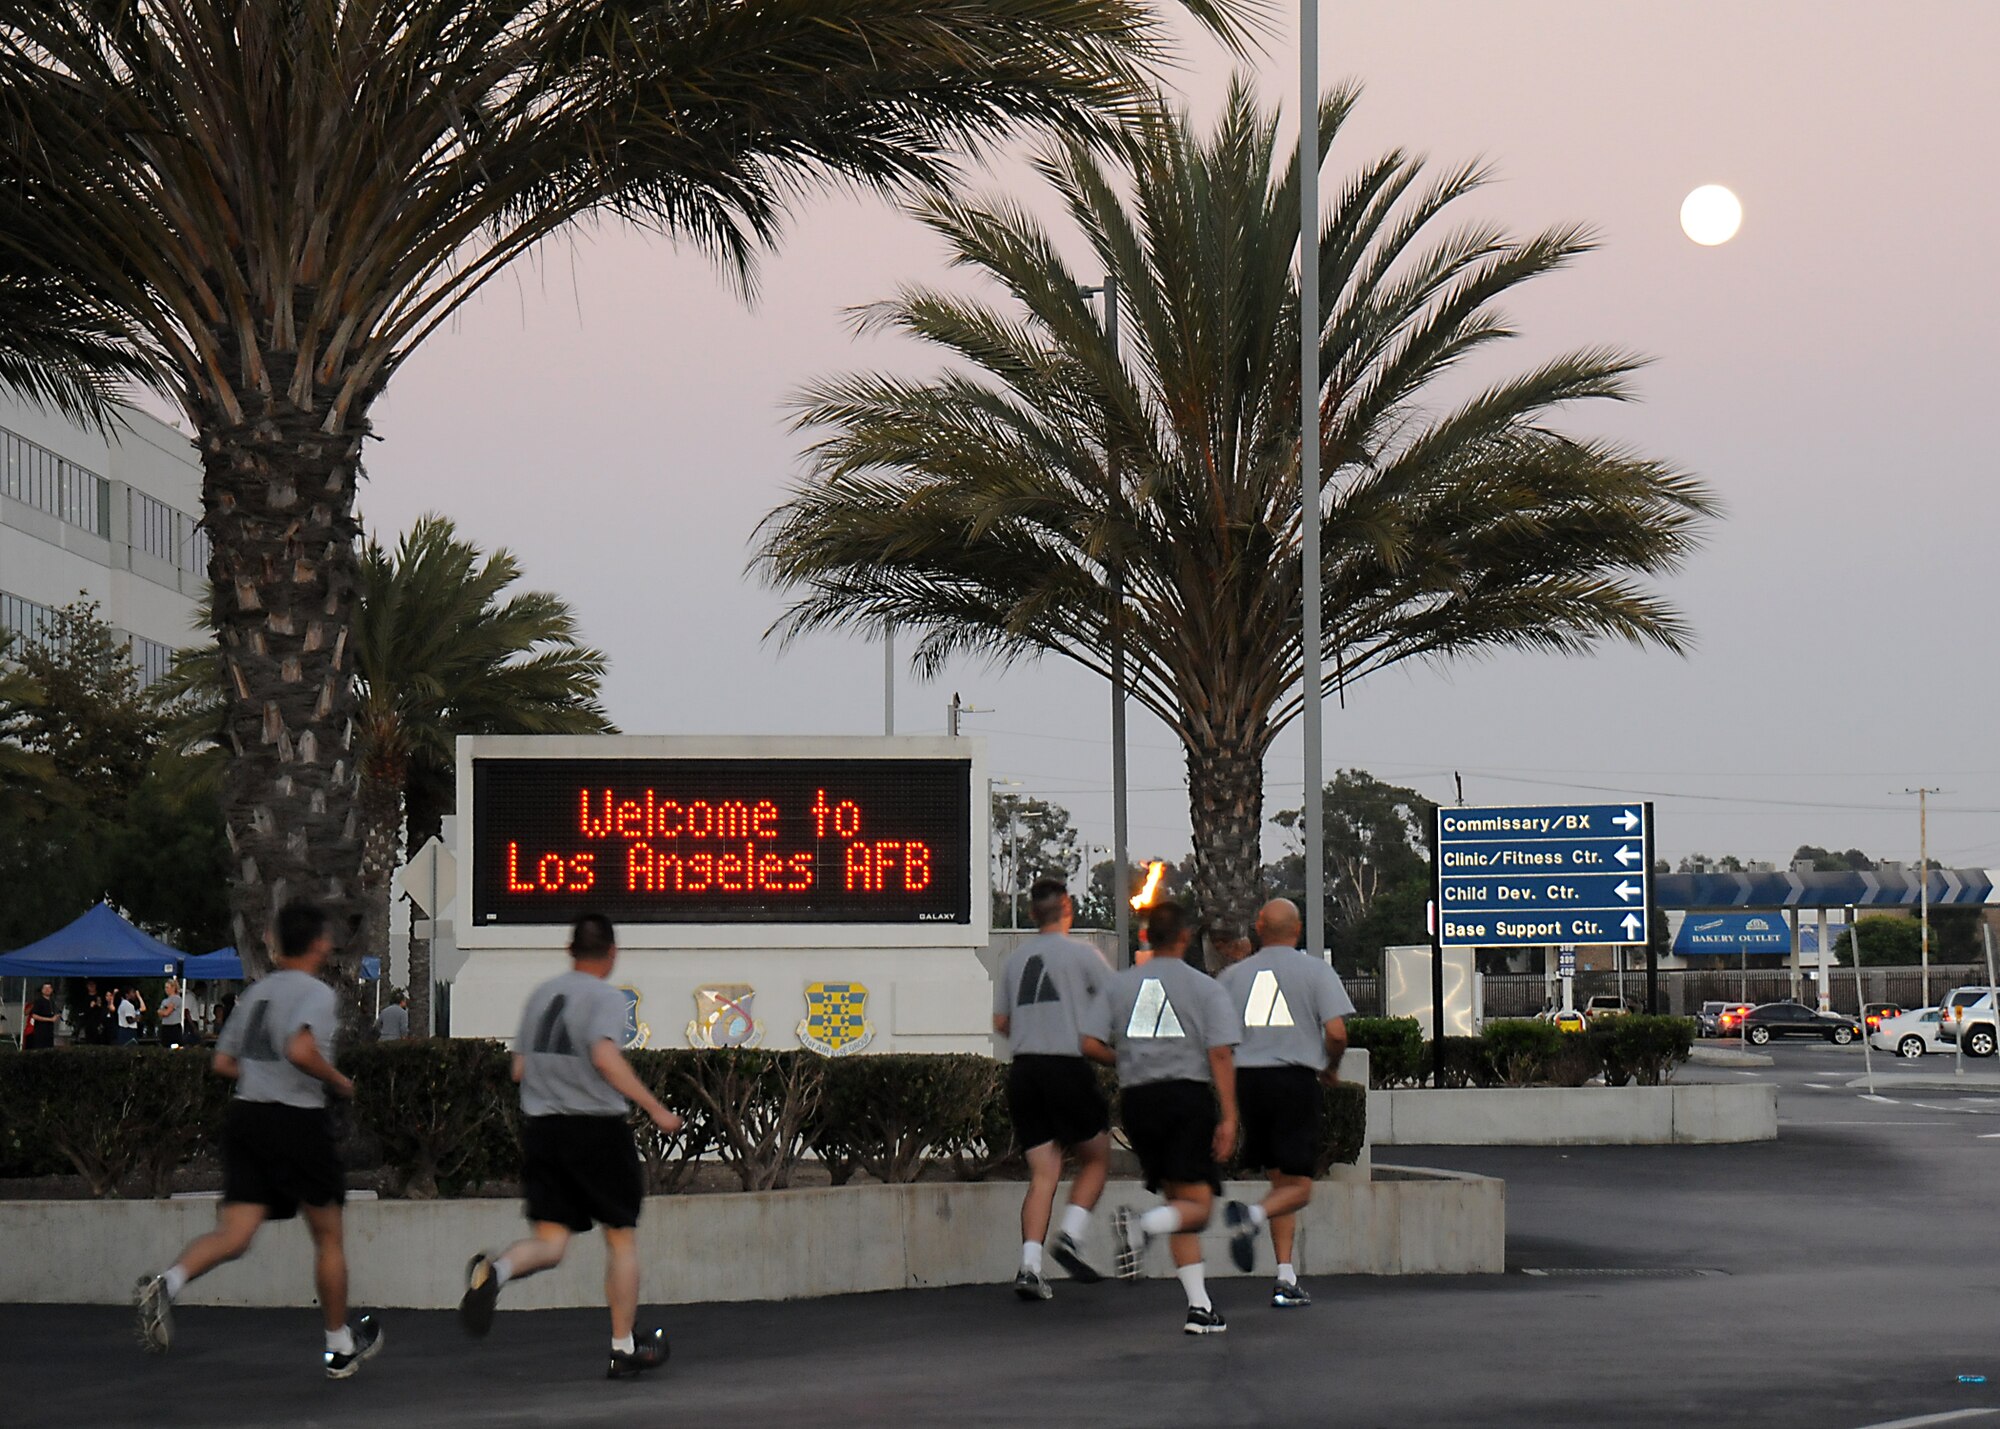 The runners arrive on base for the overnight run, Sept. 18.  (Photo by Joe Juarez)